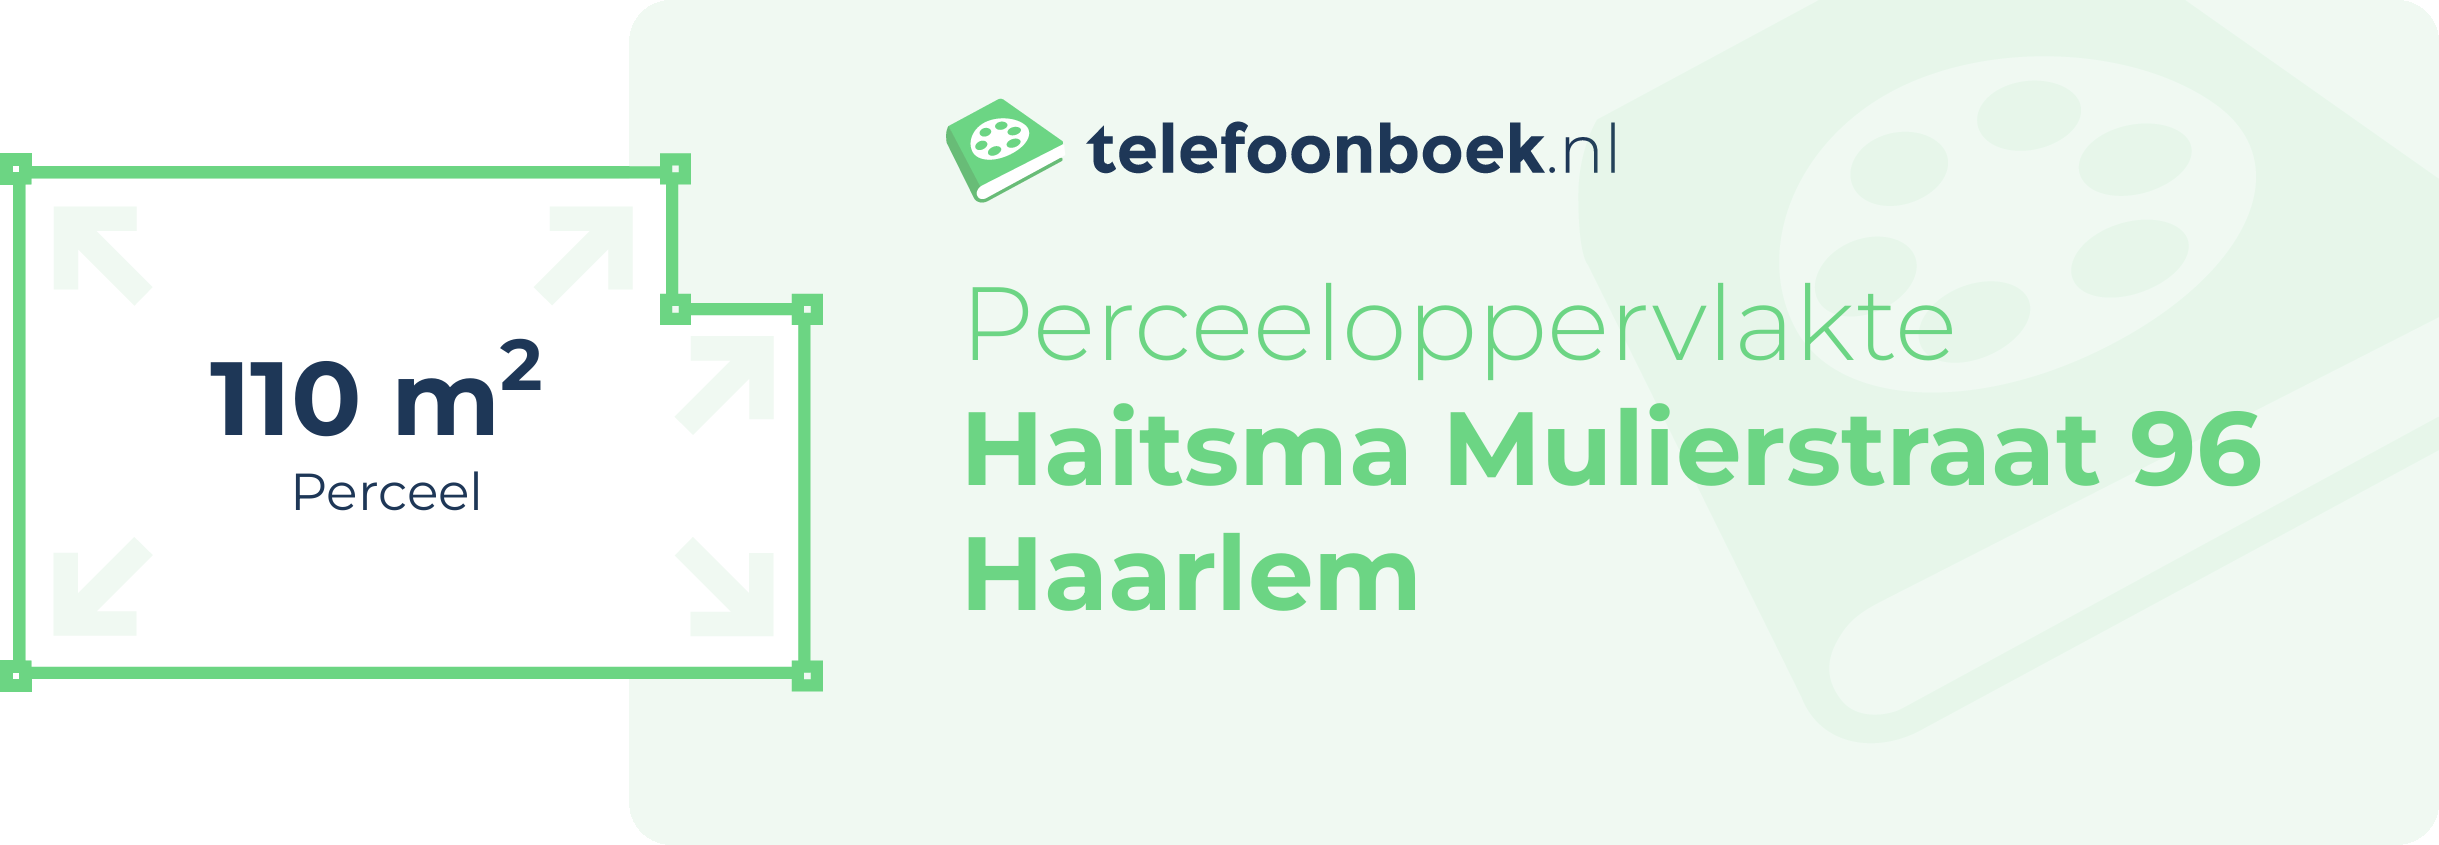 Perceeloppervlakte Haitsma Mulierstraat 96 Haarlem